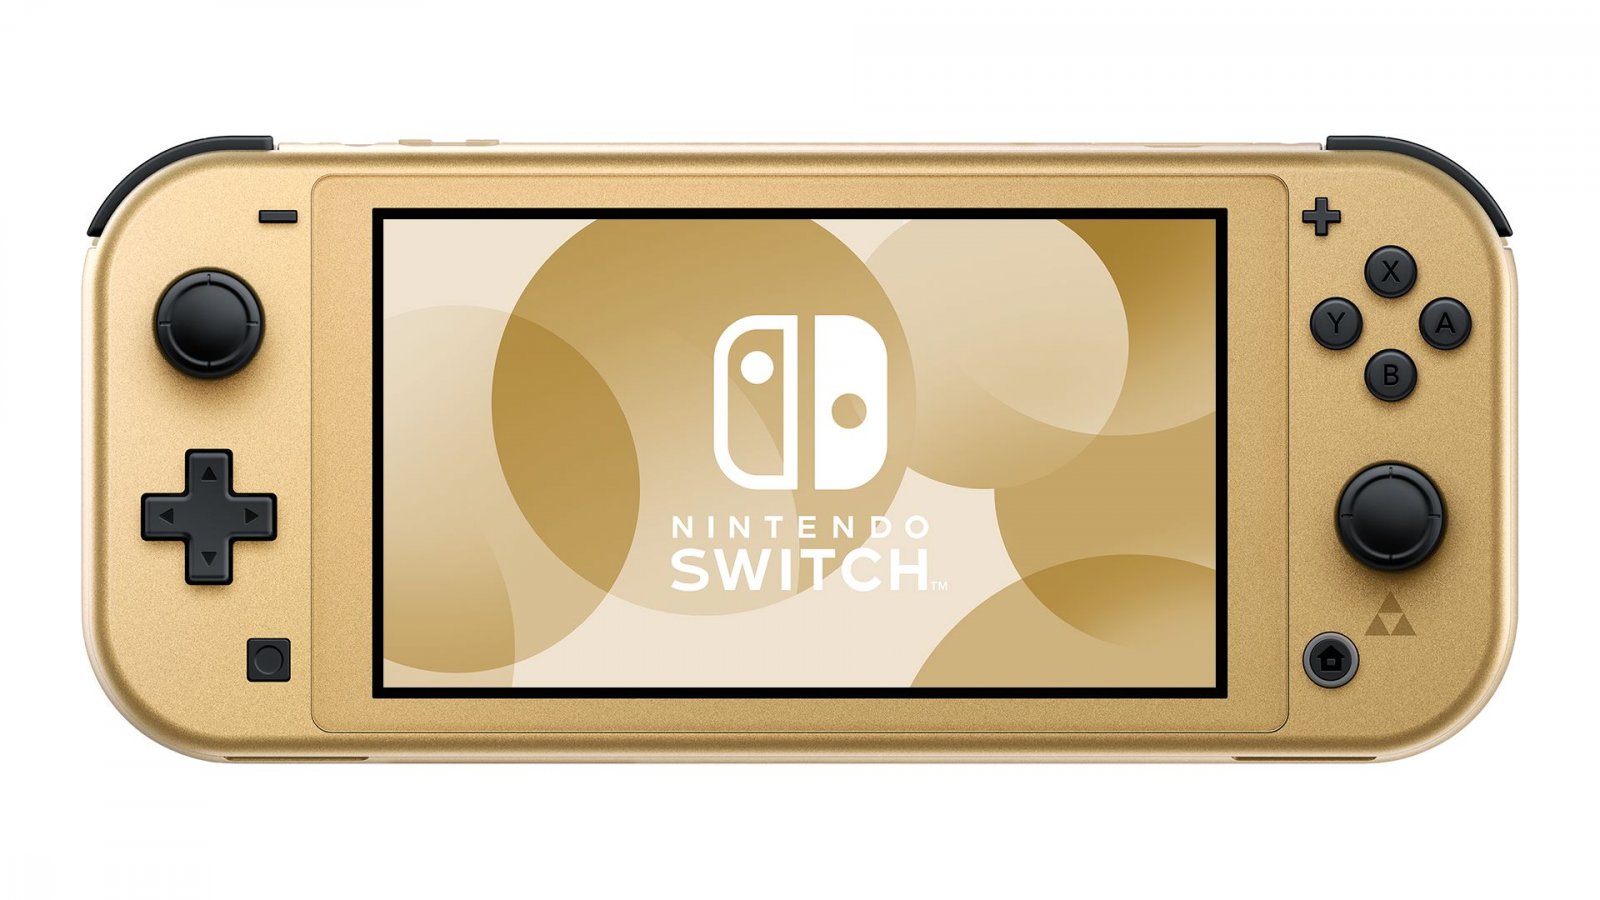 Nintendo Switch Lite Hyrule Edition